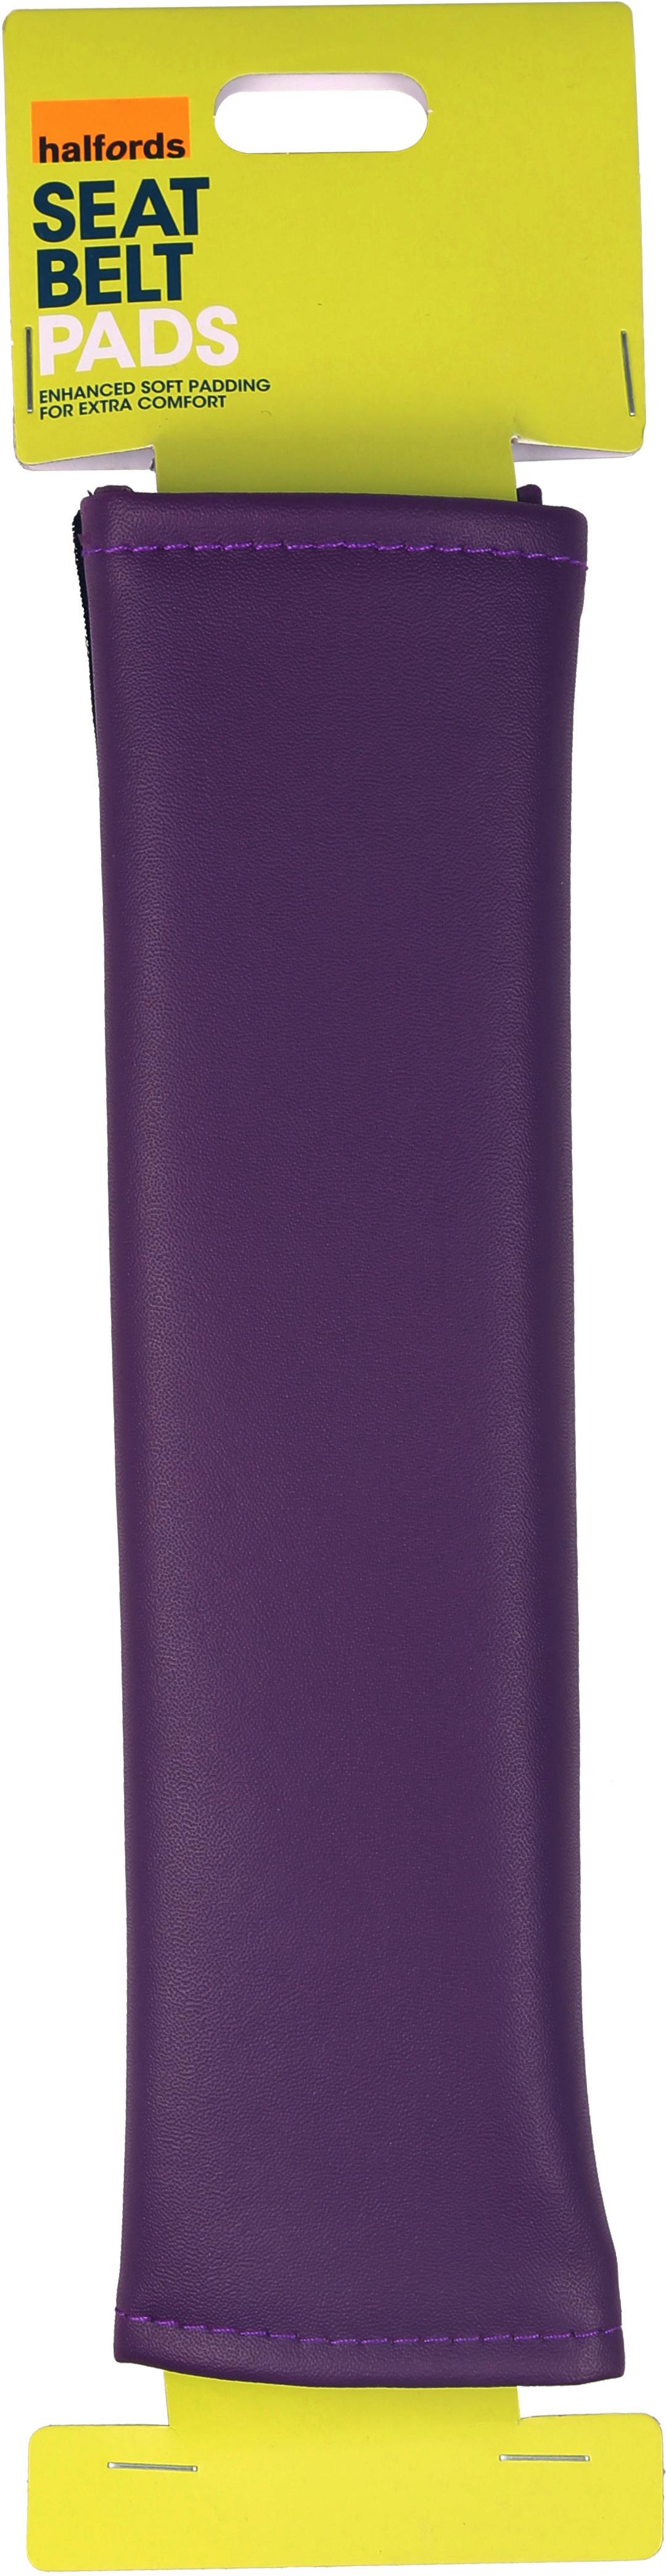 Halfords Purple Seat Belt Pad